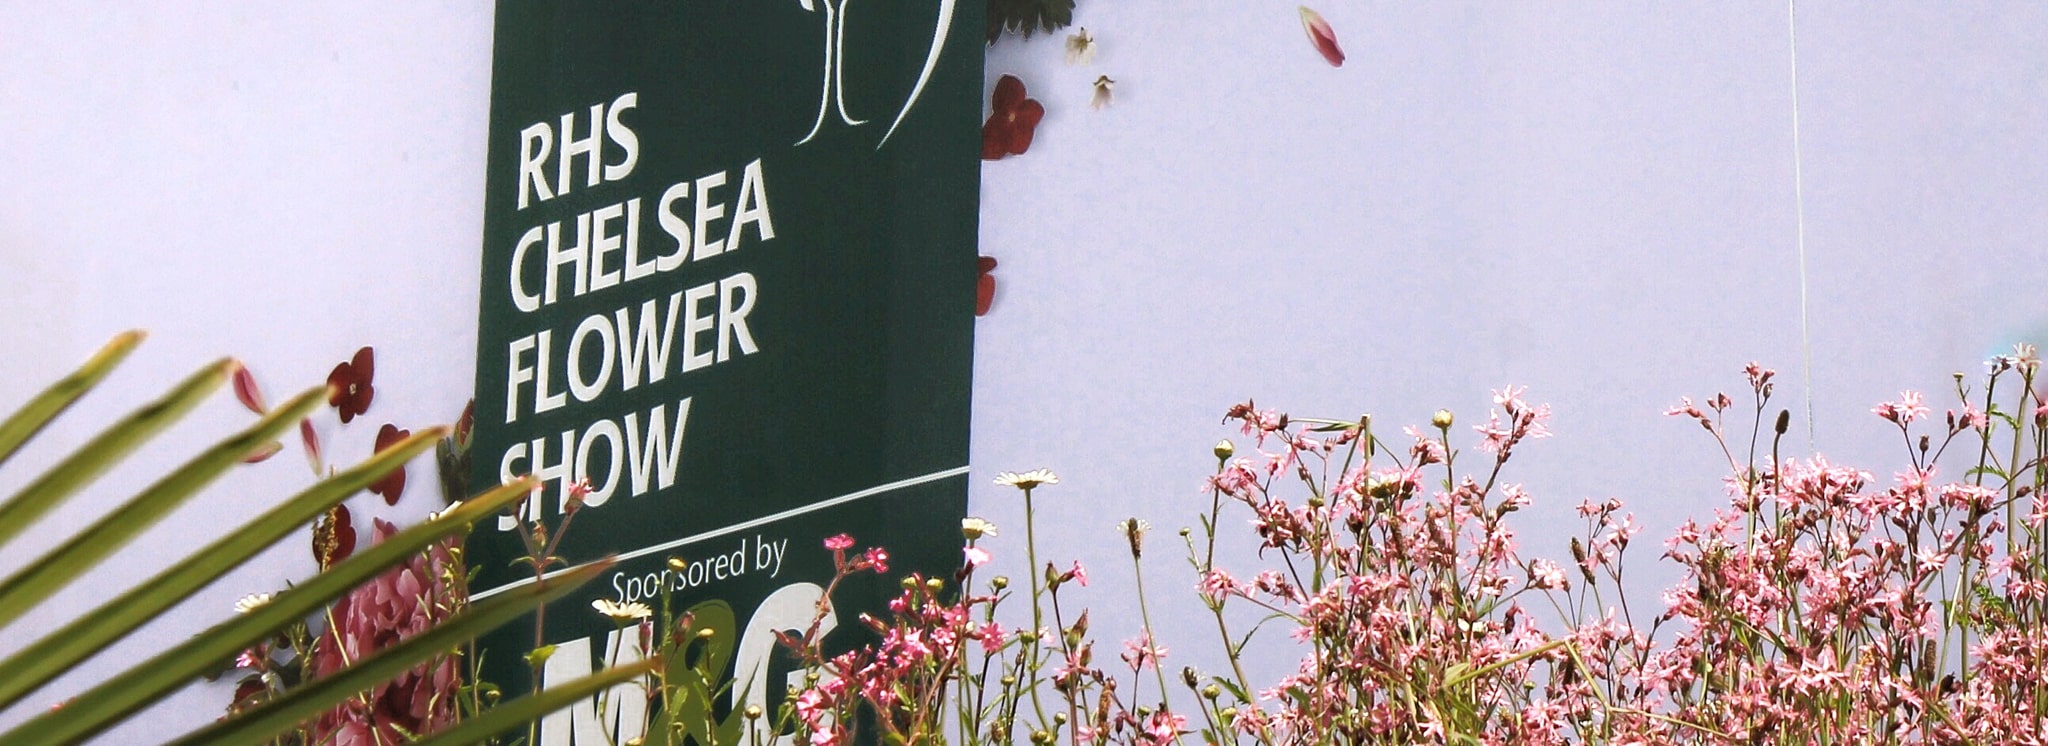 RHS Chelsea Flower Show logo on side of show pavillion